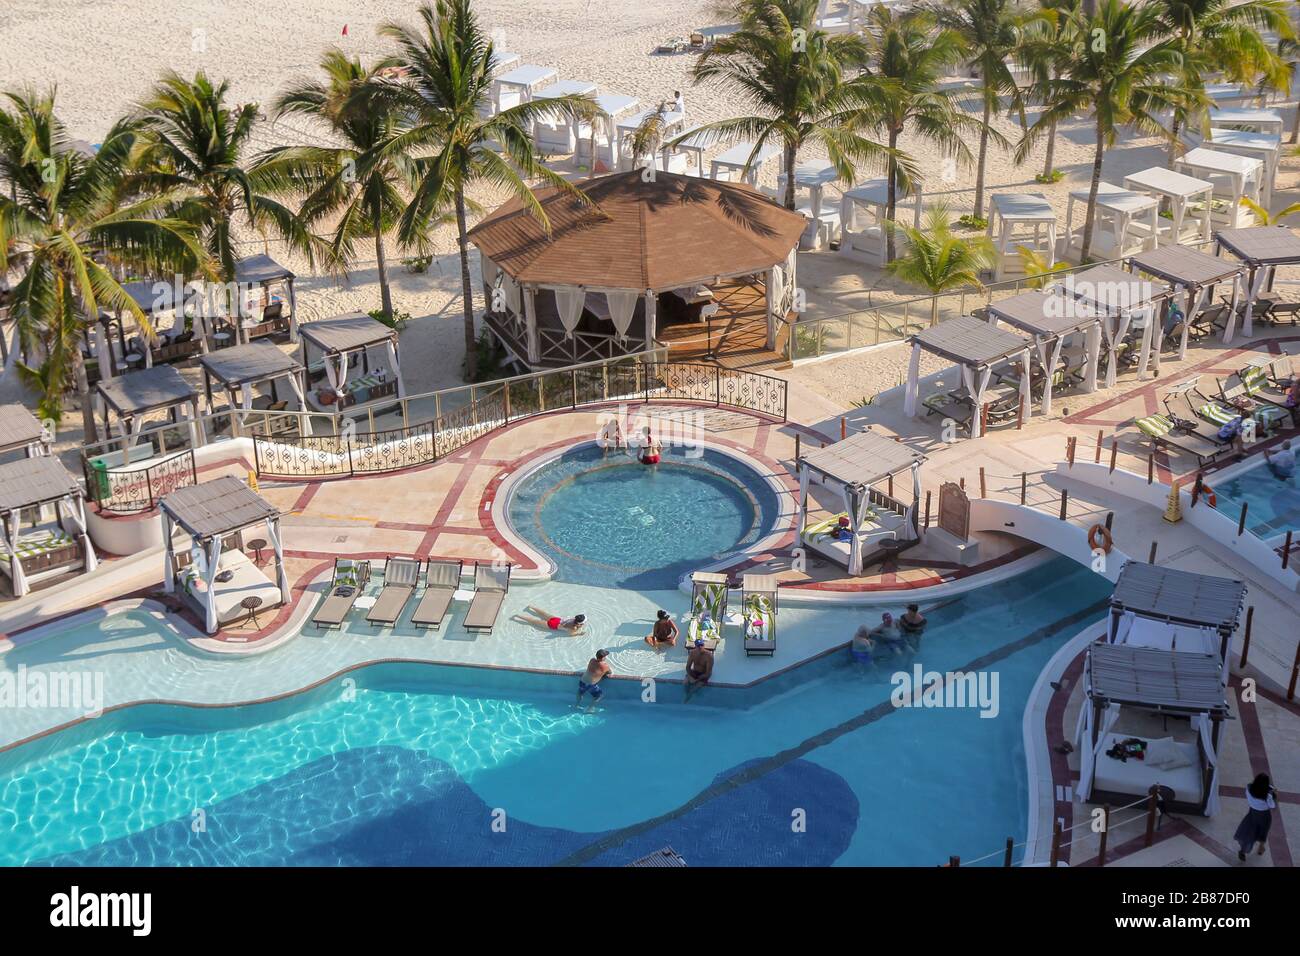 A view from above of the pool at the Hyatt Zilara Resort, Cancun, Quintana Roo, Yucatan Peninsula, Mexico Stock Photo